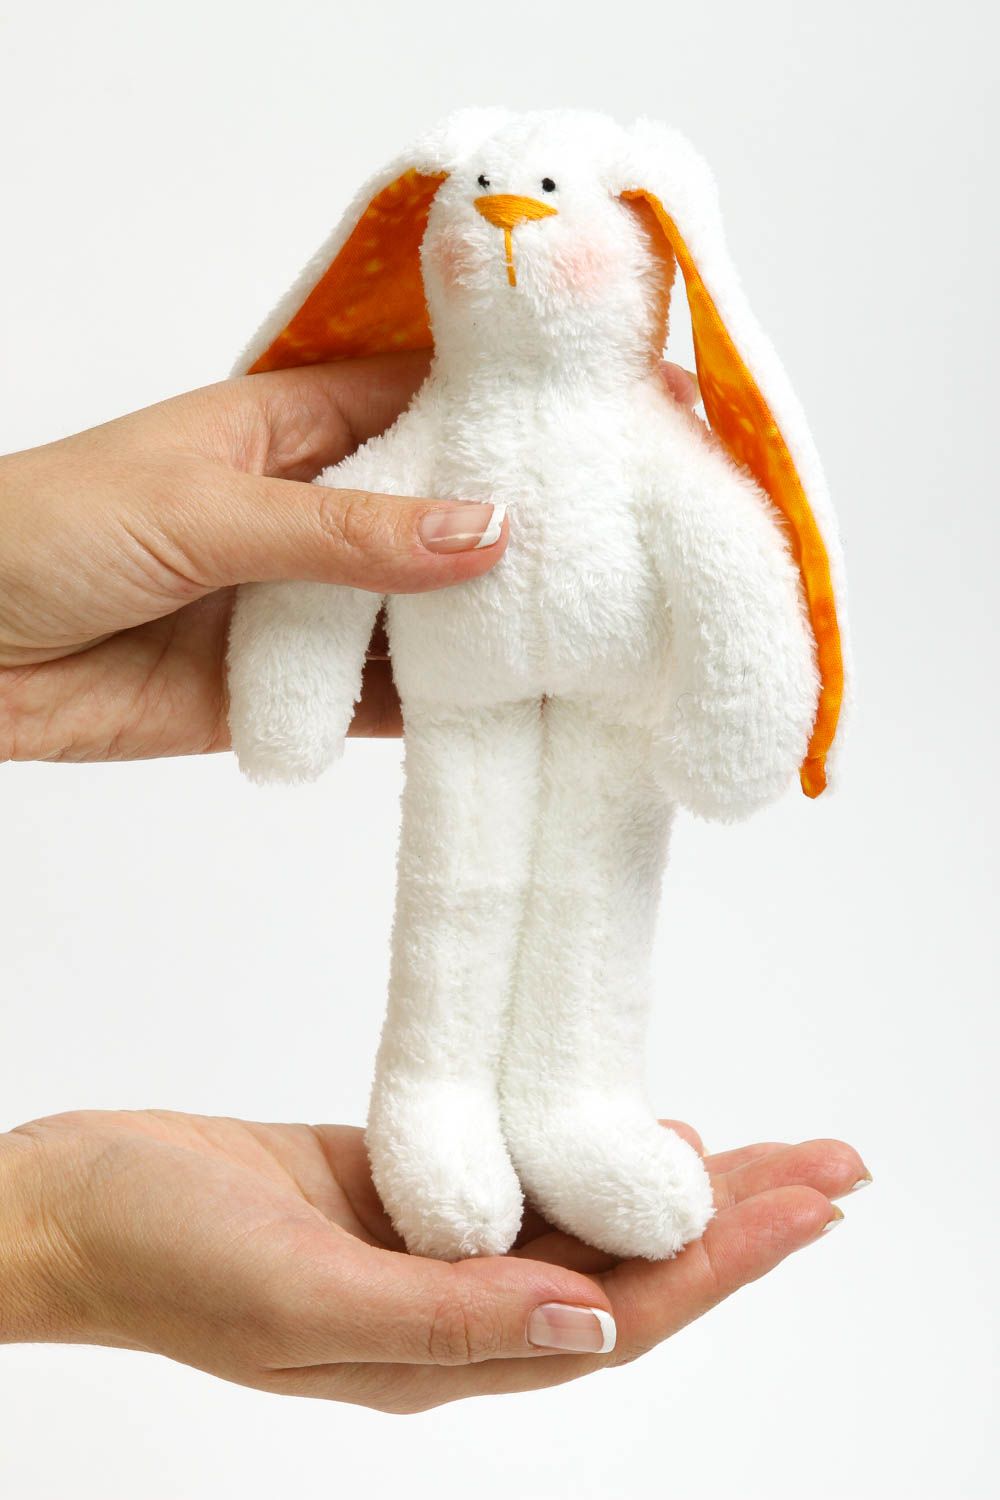 Handmade soft toy plush toys animal toys nursery decor gift ideas for kids photo 5